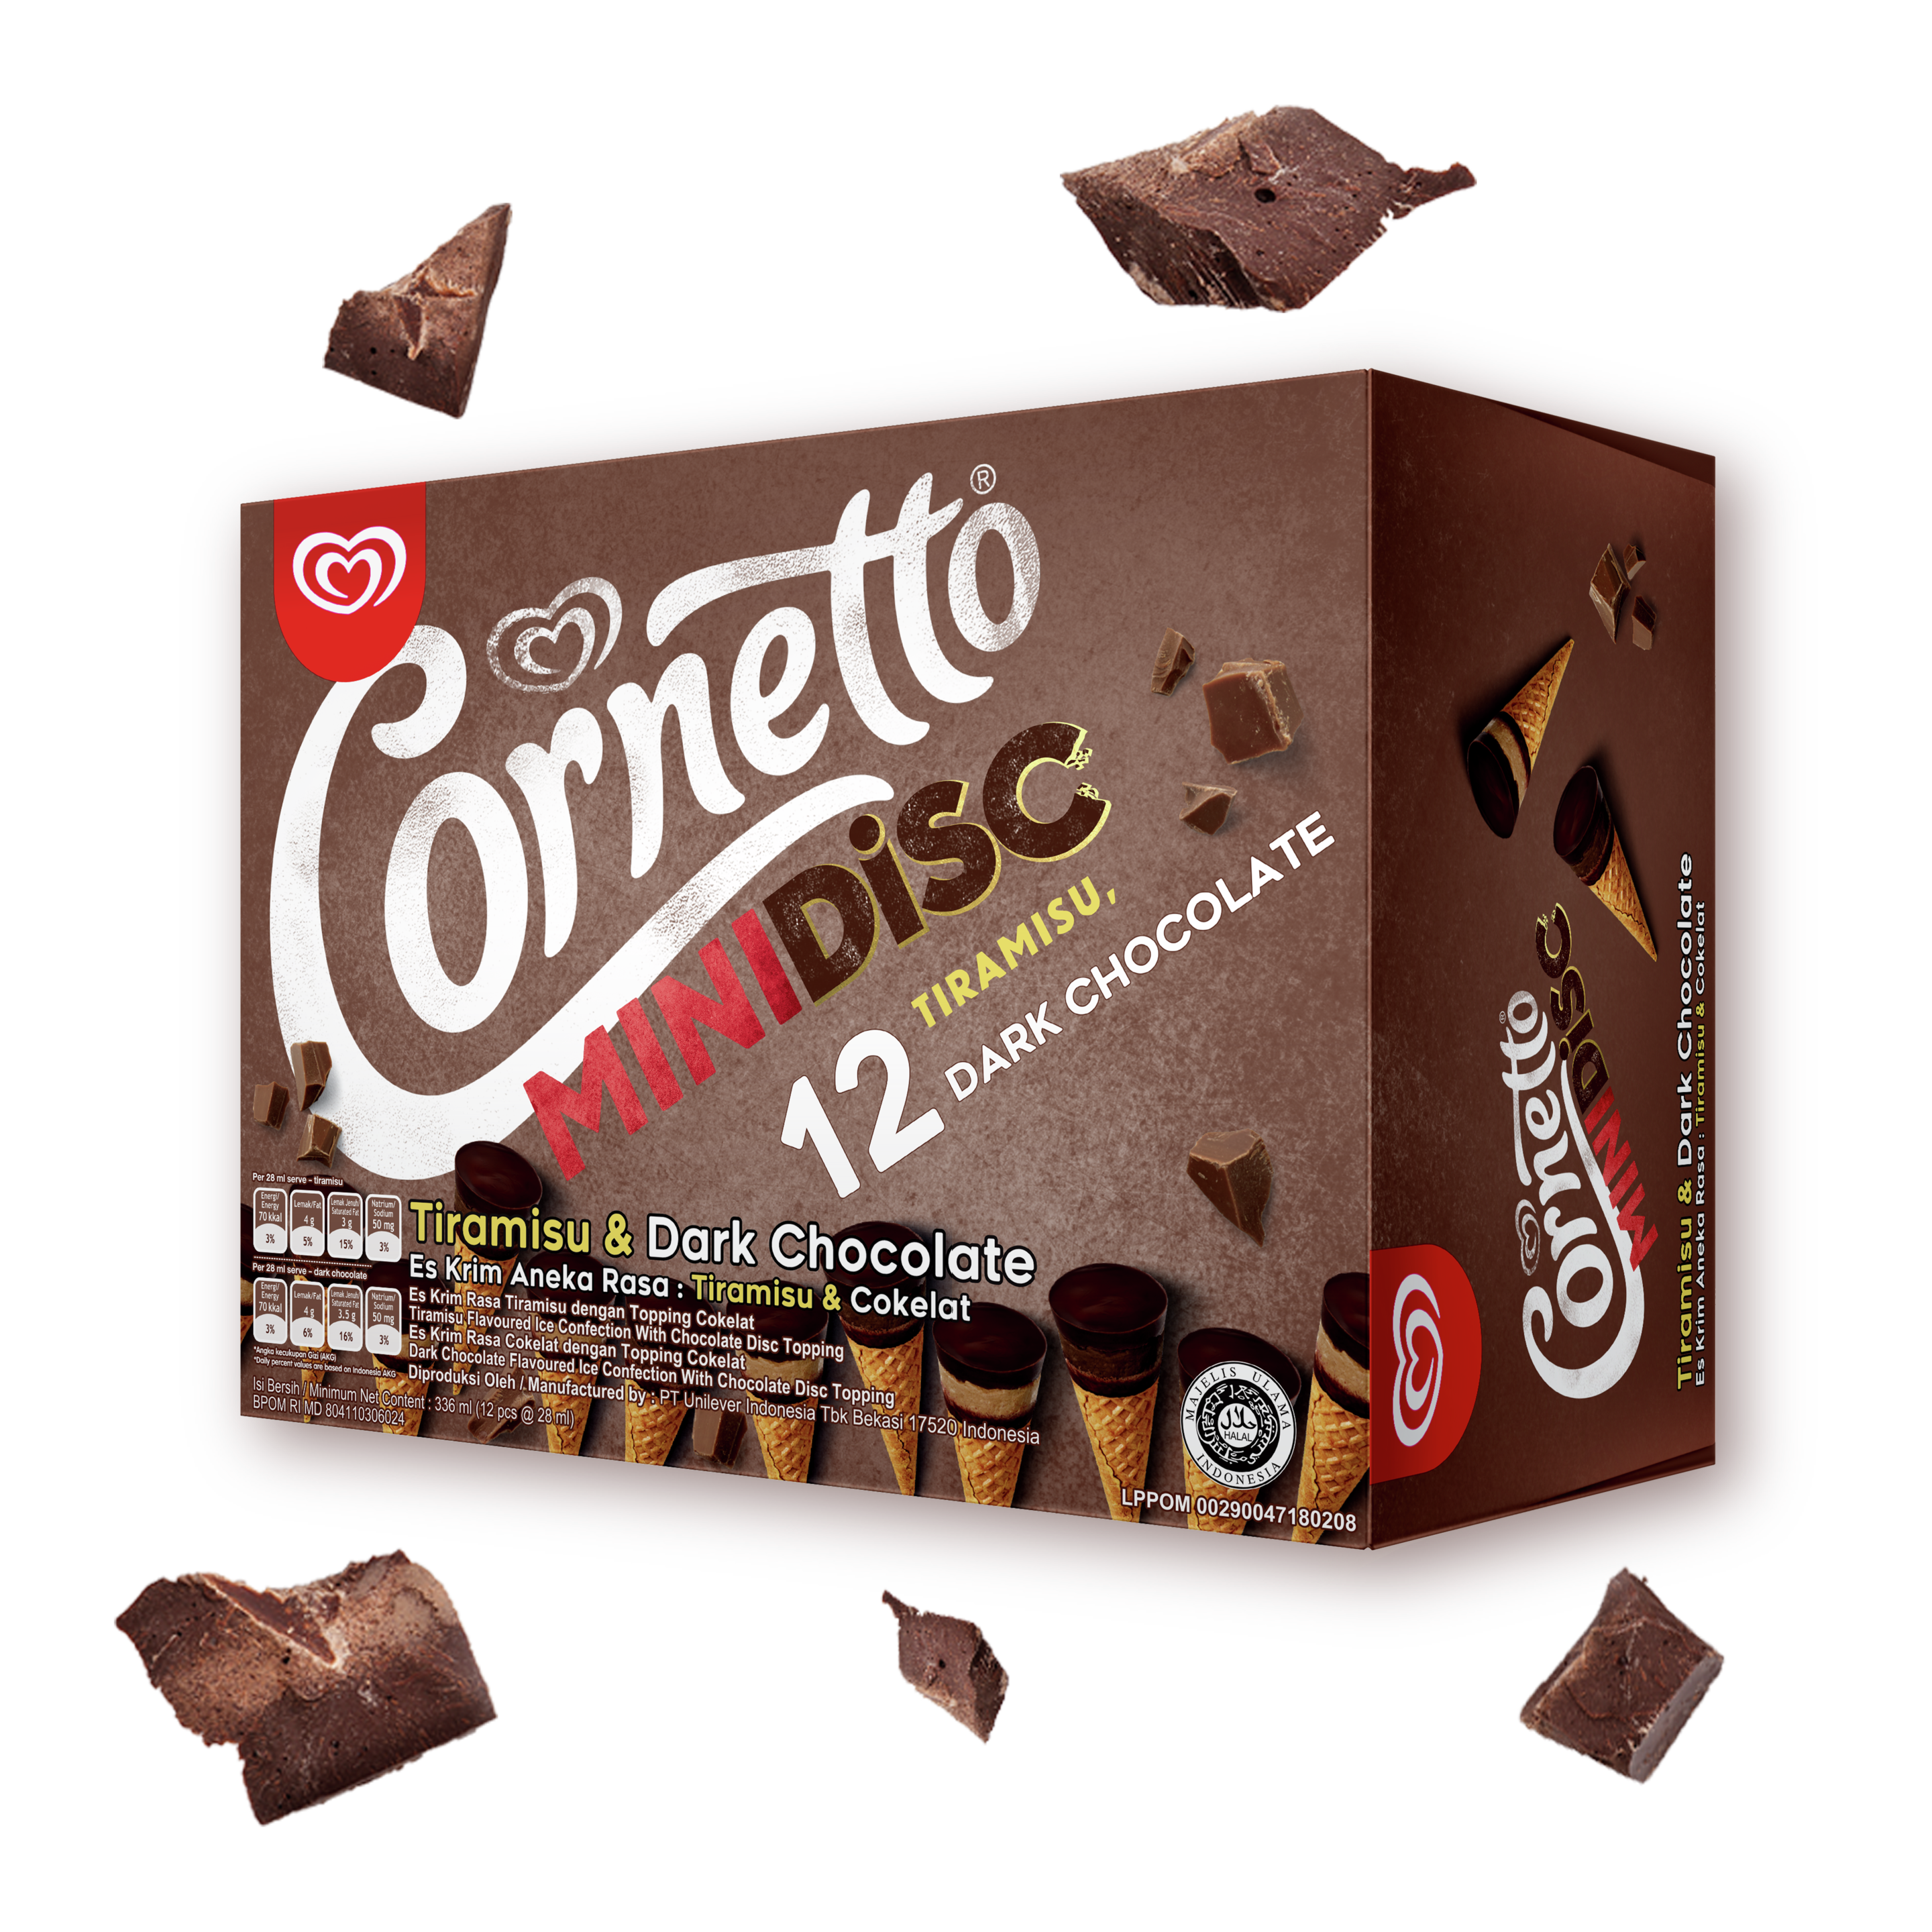 CORNETTO MINI CHOCOLATE & TIRAMISU